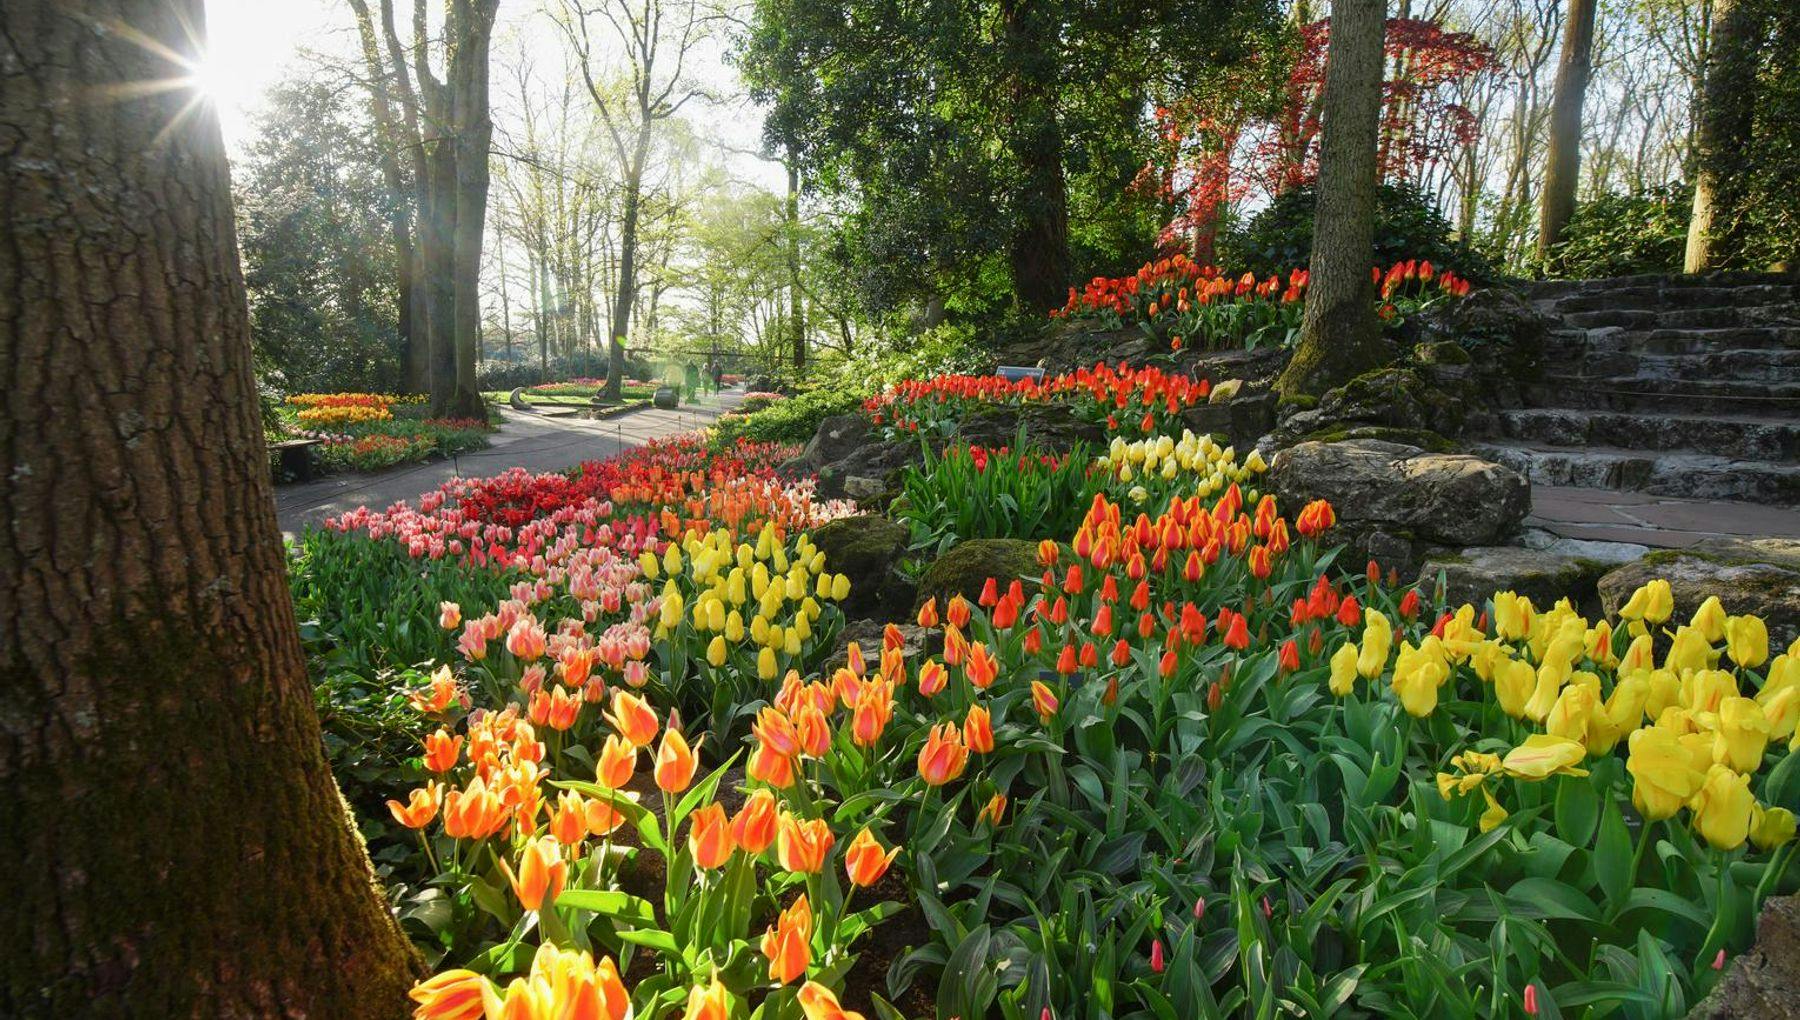 Tulip display in Keukenhof gardens 2022